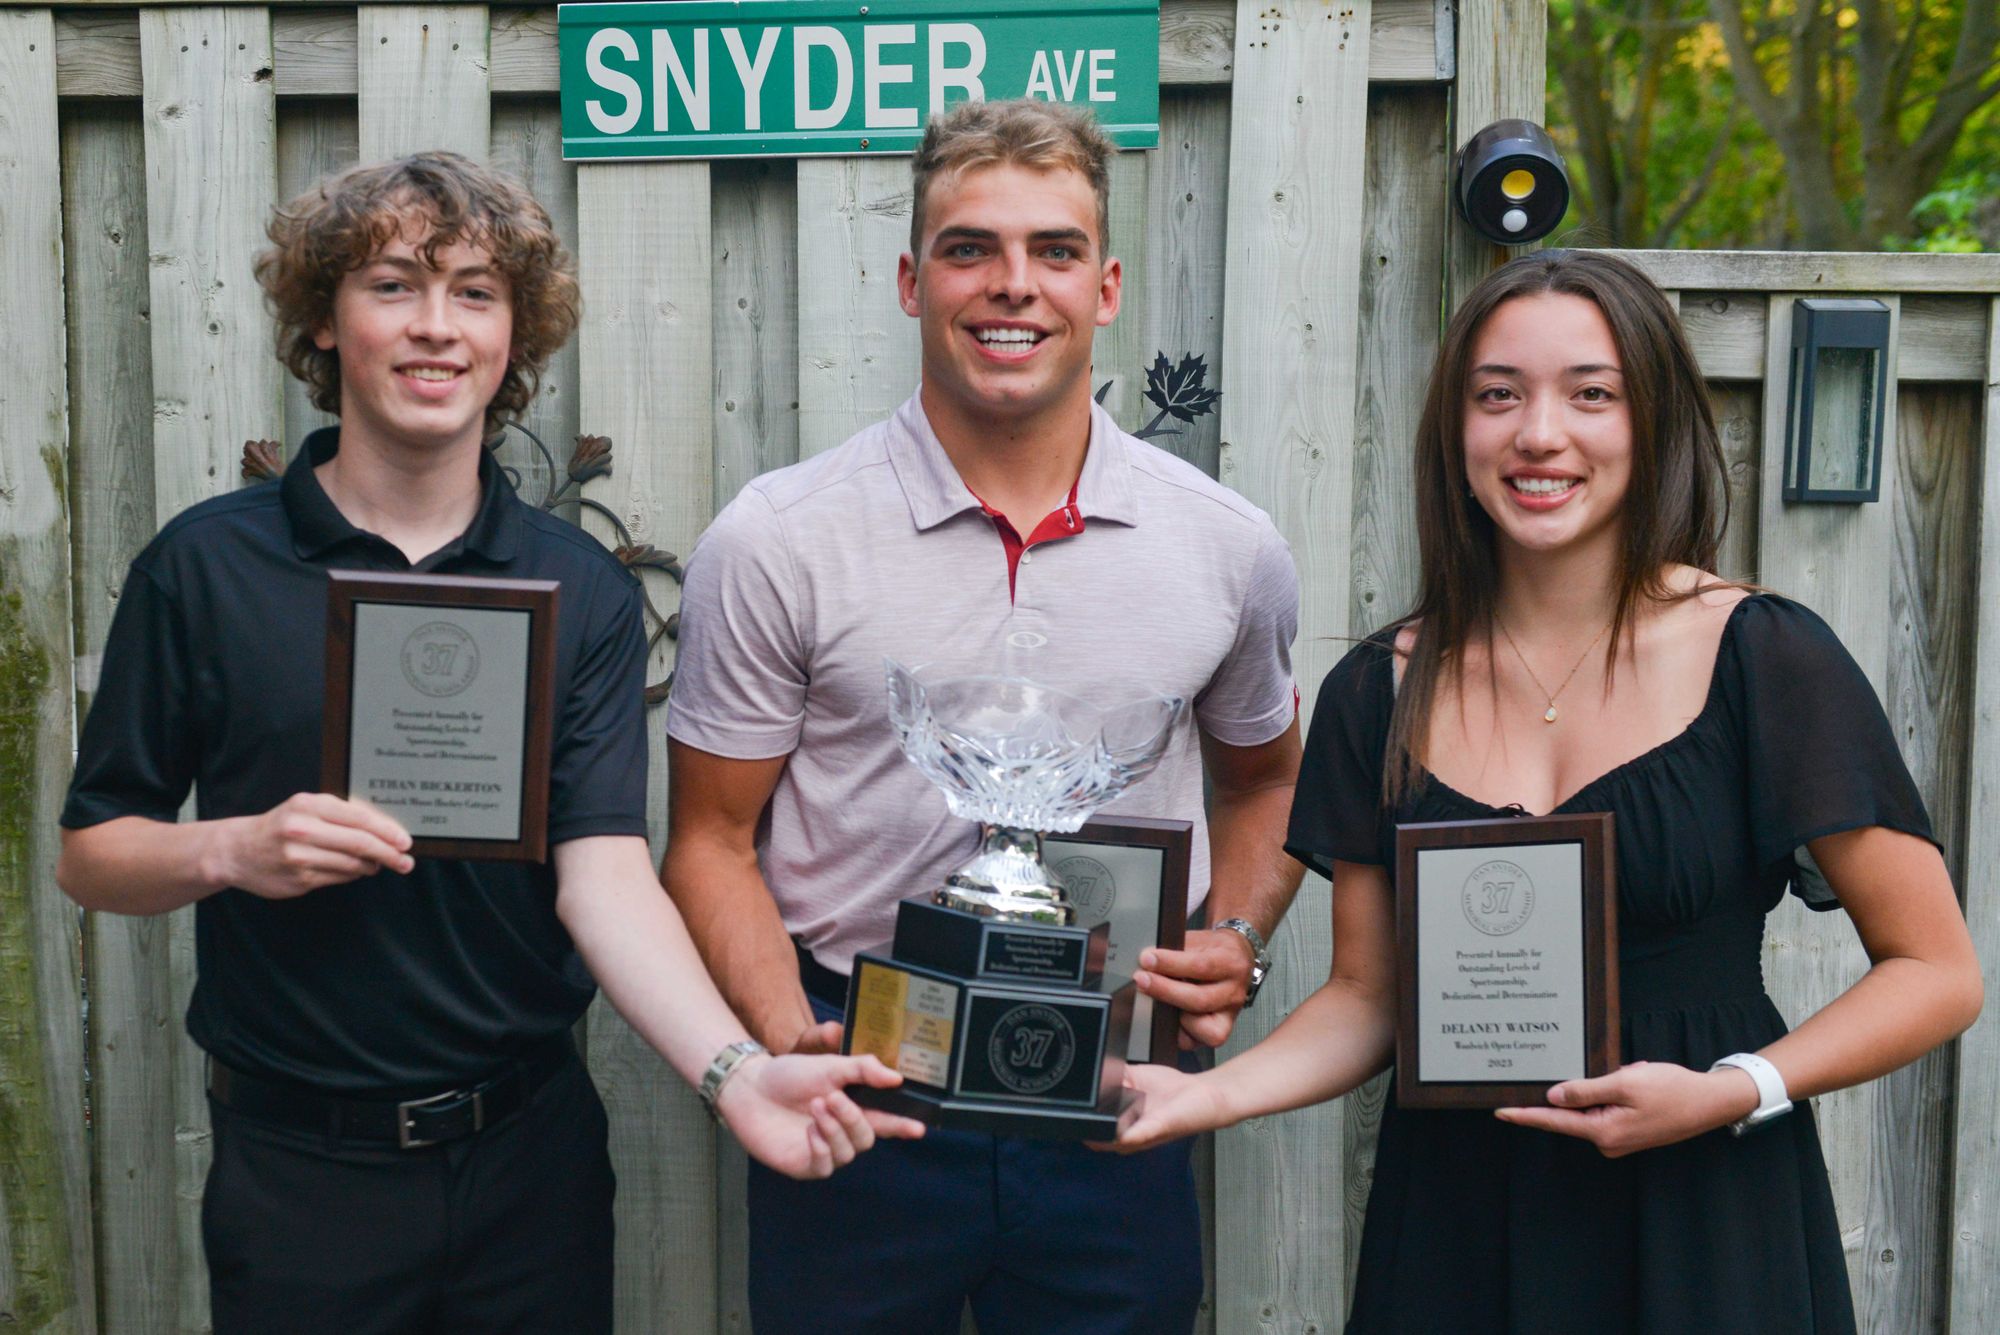 Three young athletes win scholarship awards